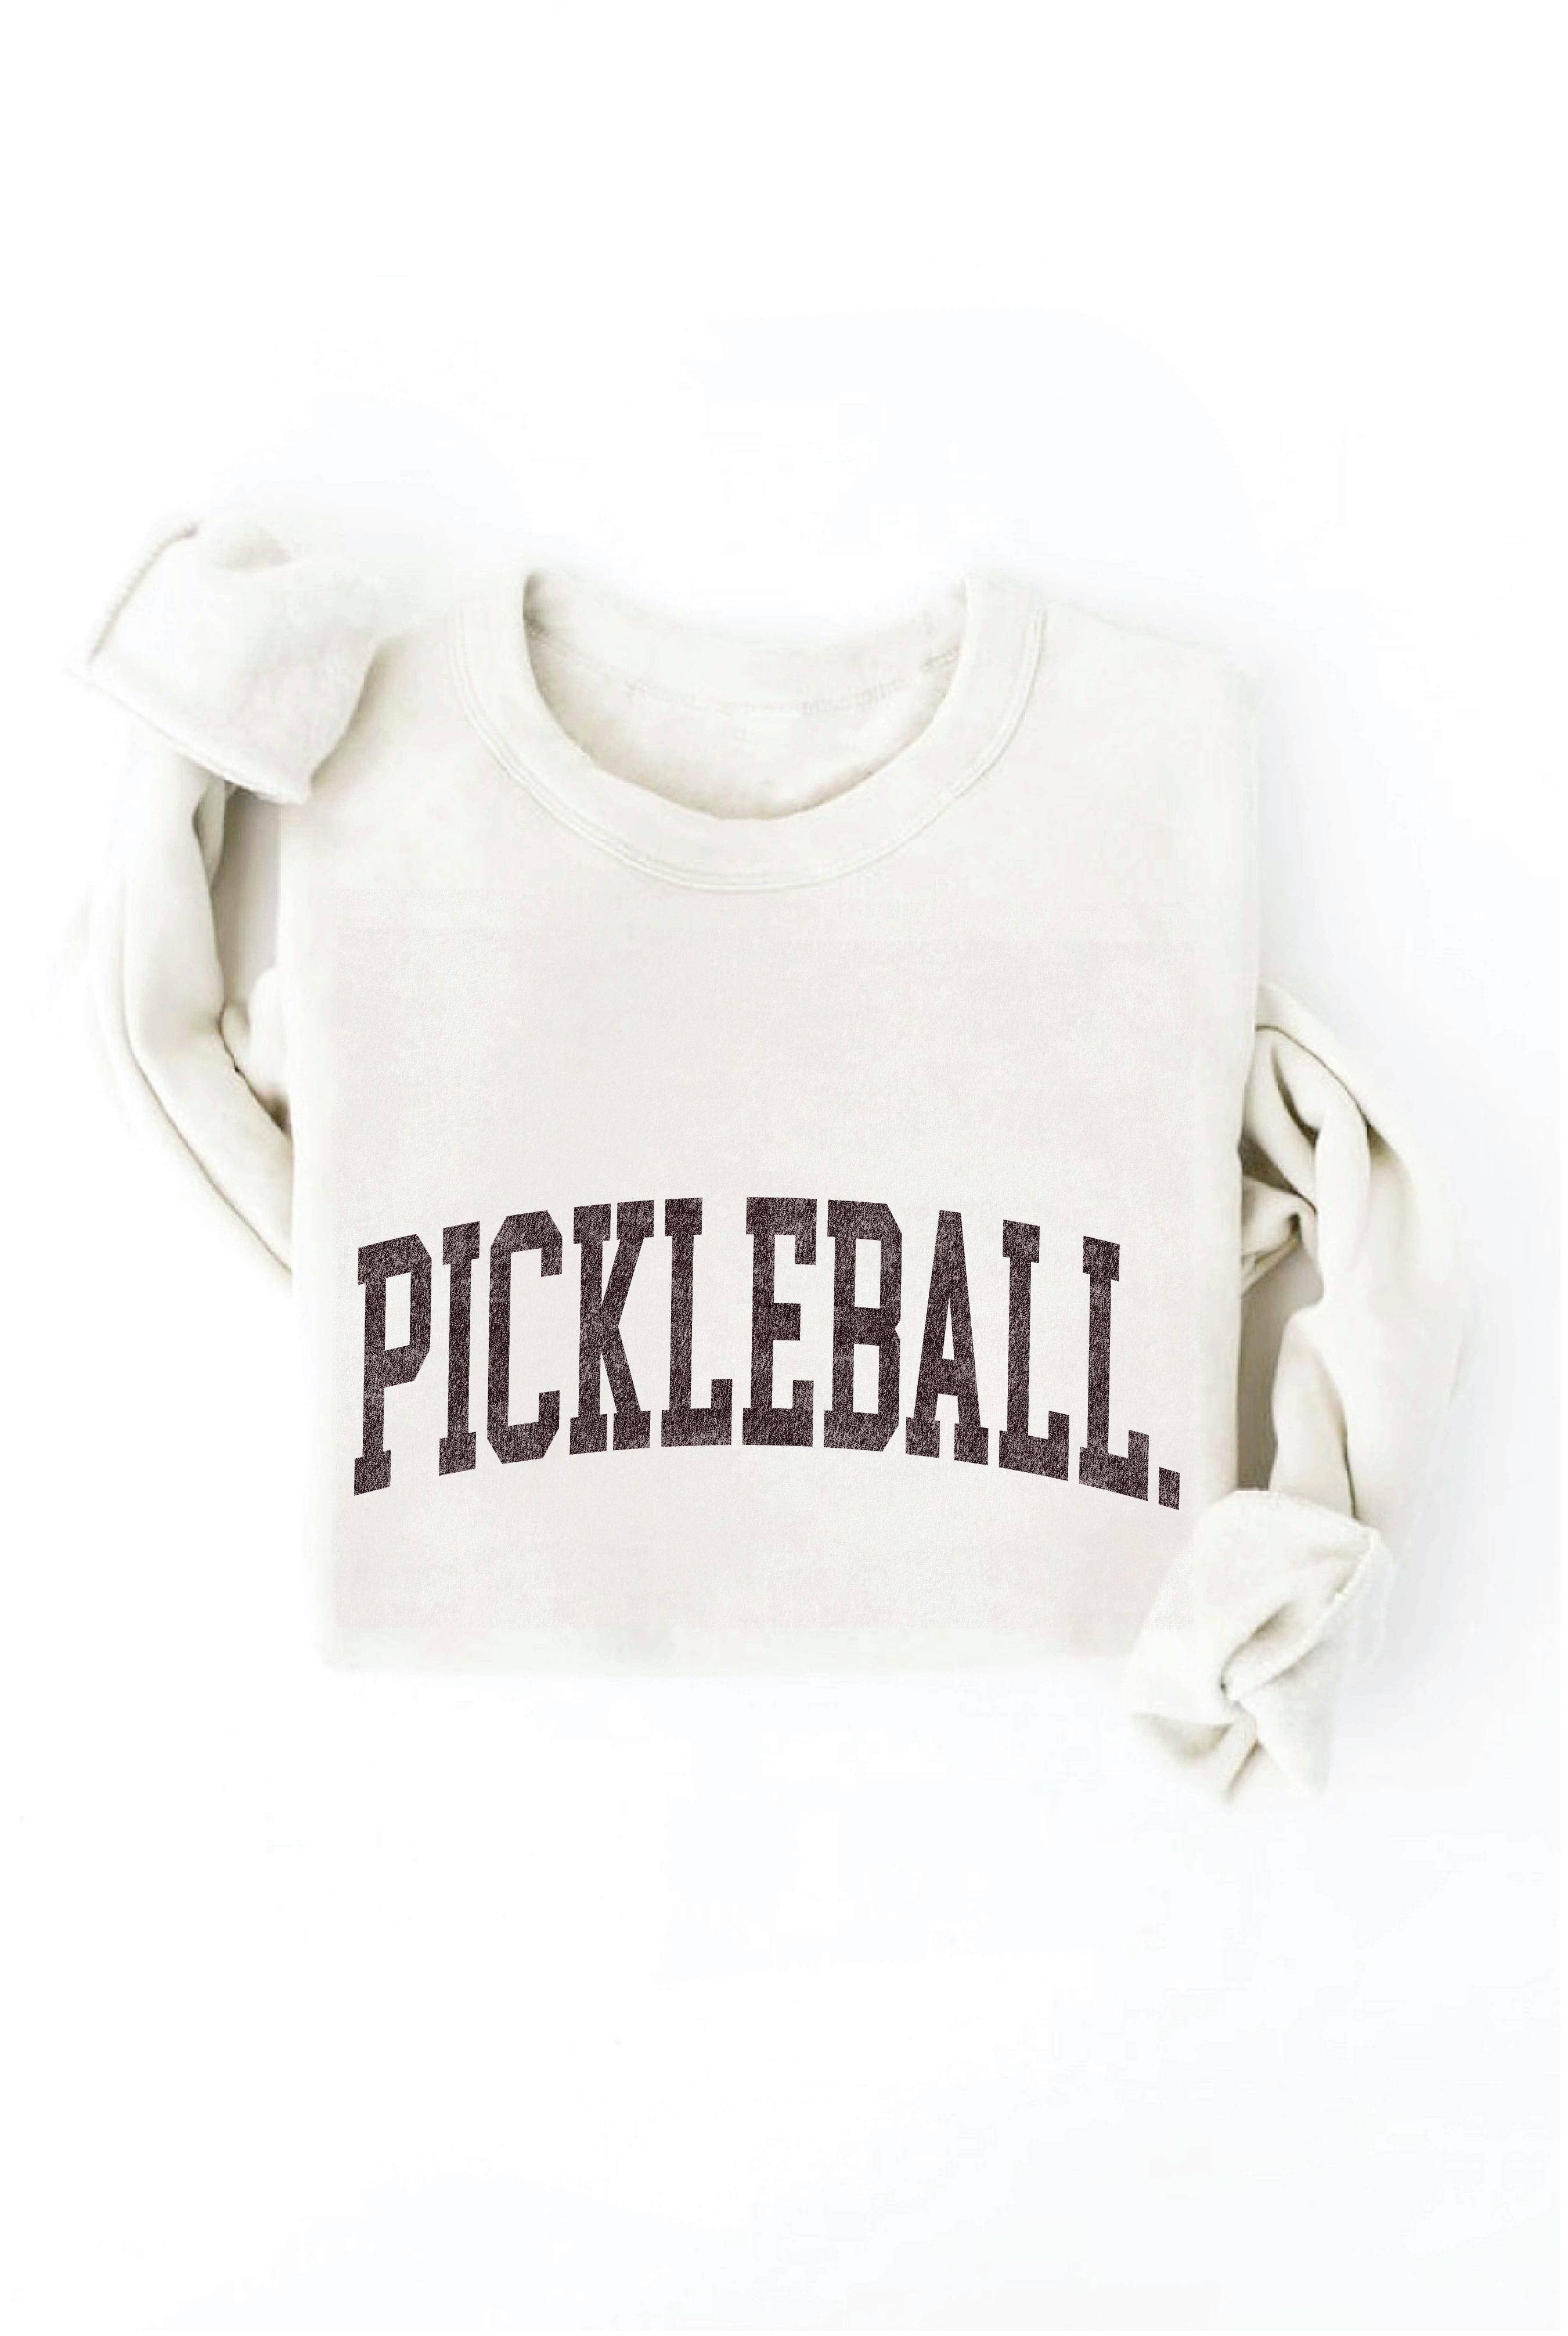 PICKLEBALL Graphic Sweatshirt: M / ROSE